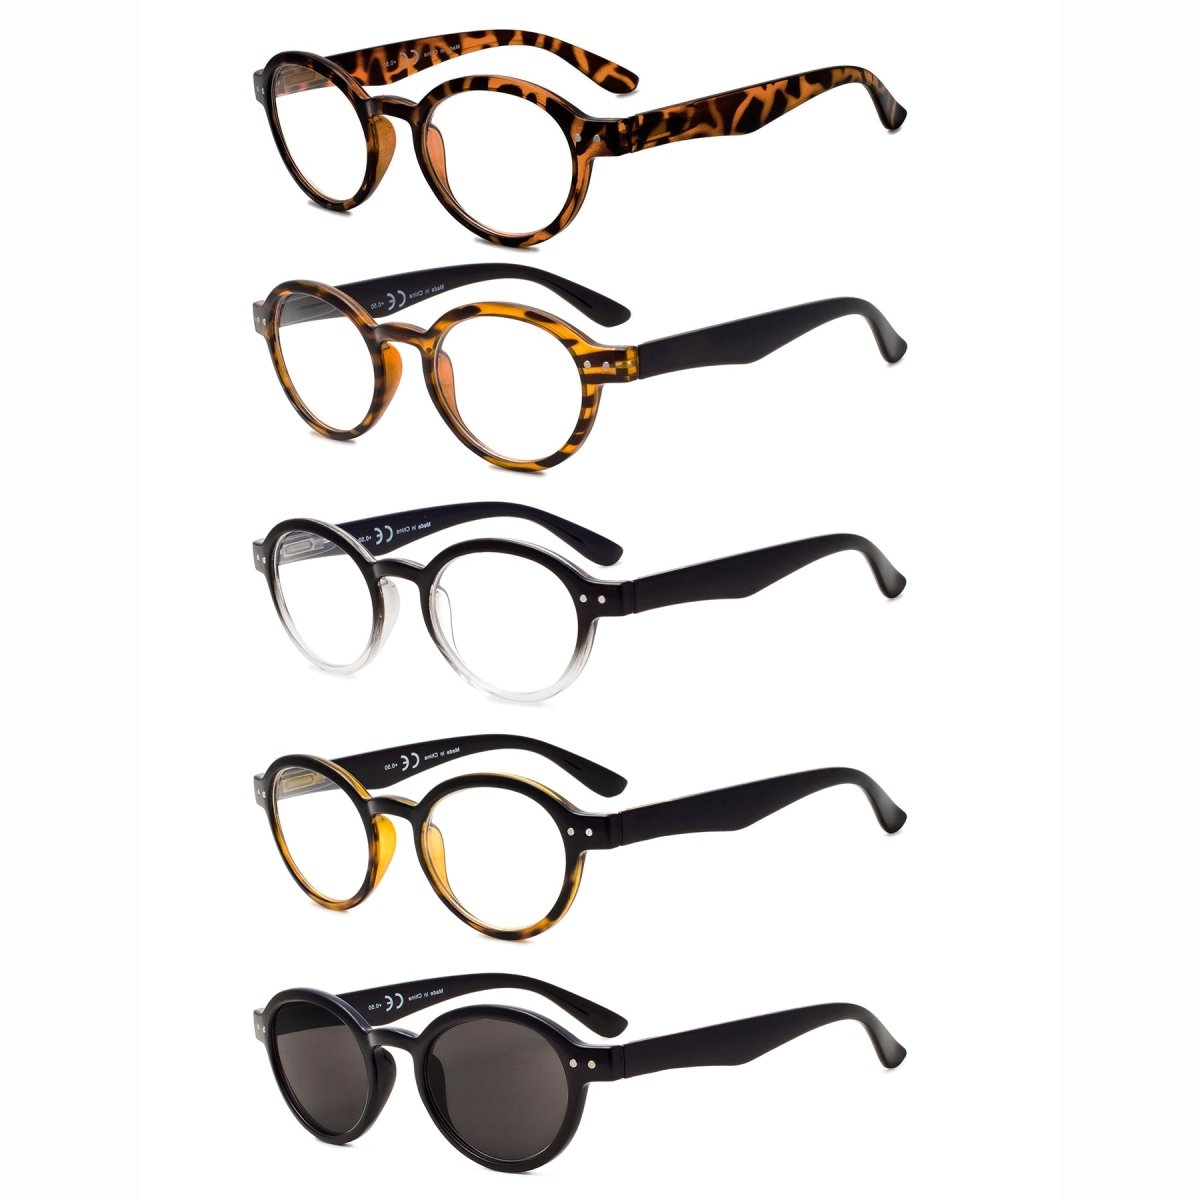 5 Pack Retro Round Reading Glasses Include Sunglasses R070eyekeeper.com